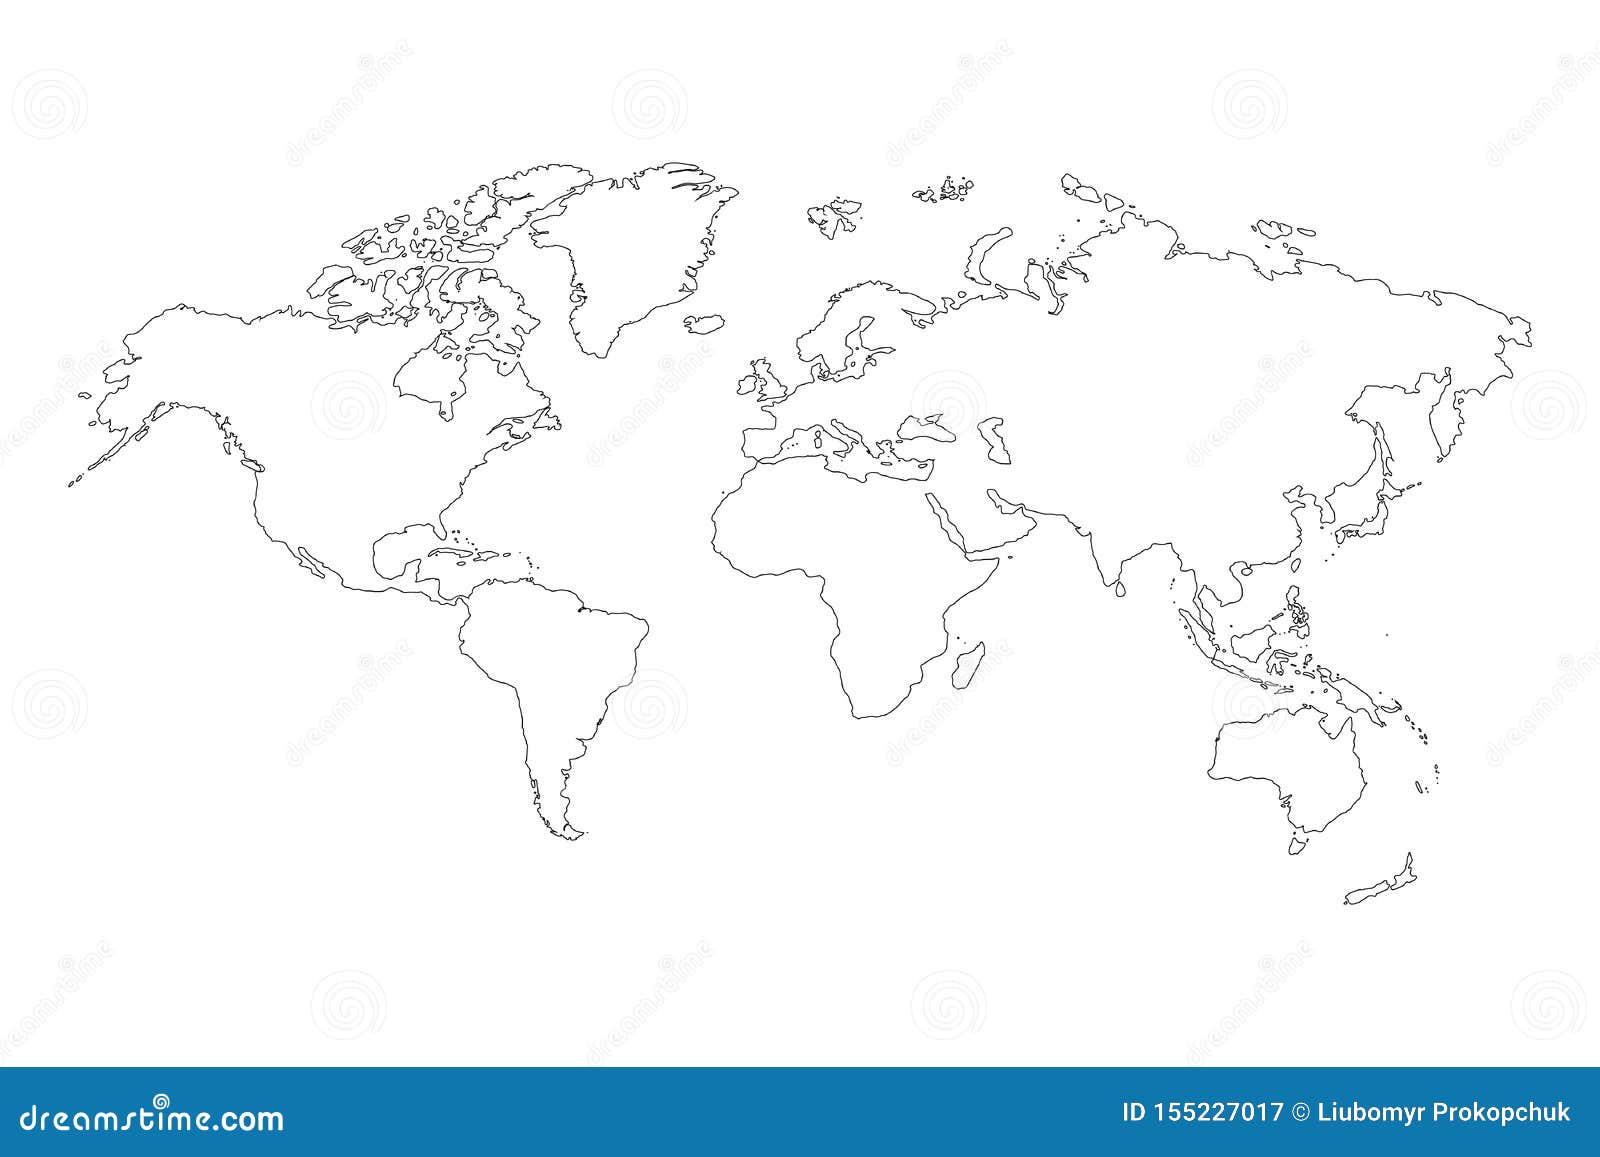 Best popular world map outline graphic sketch Vector Image